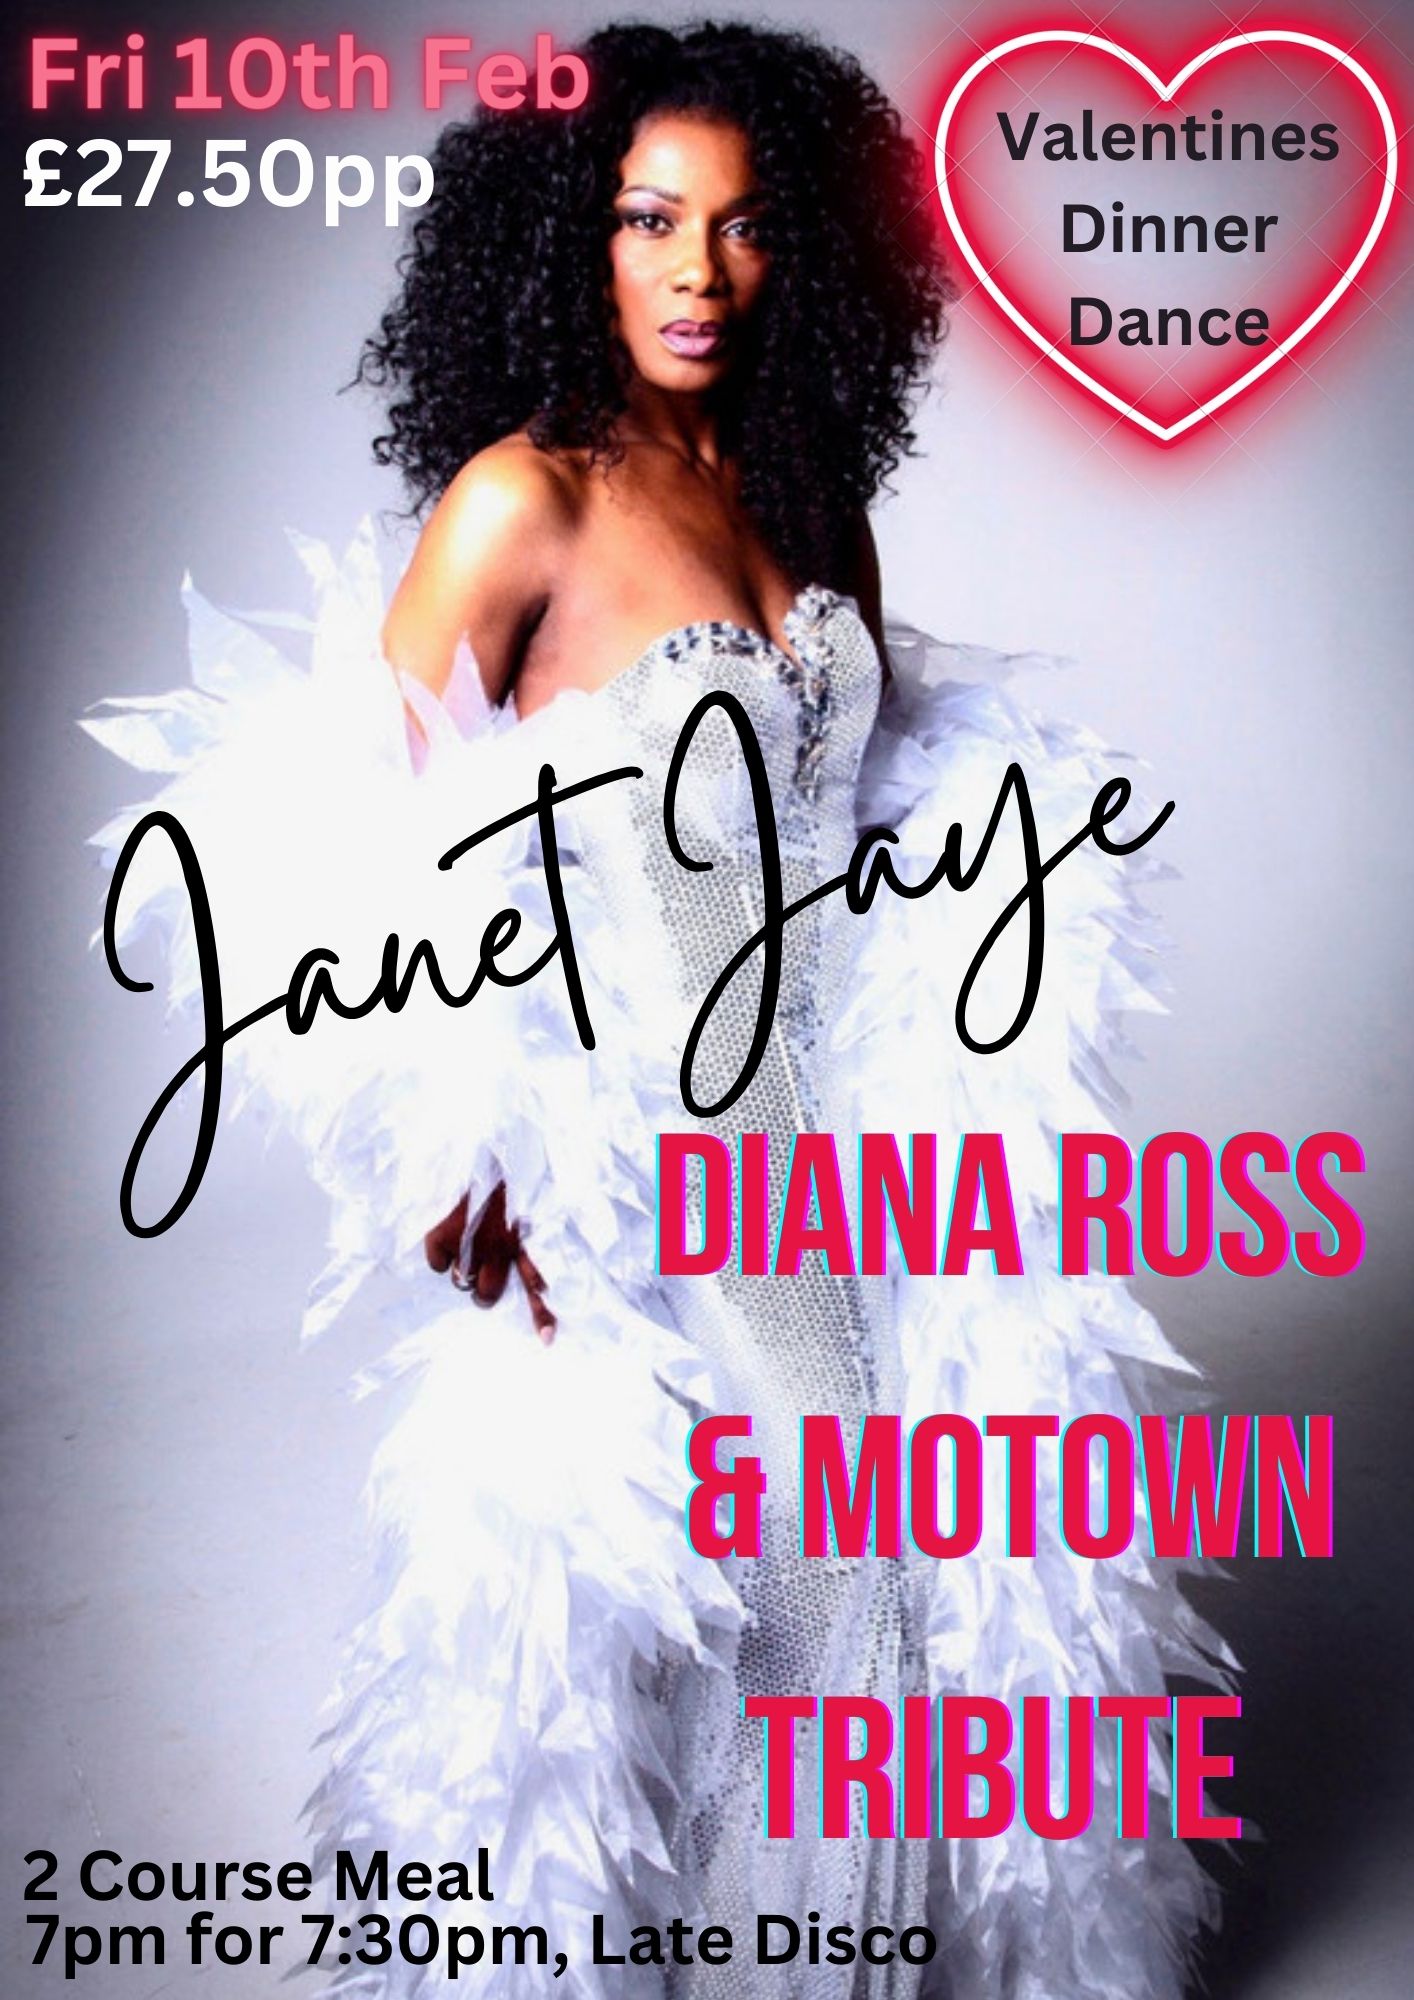 Janet Jaye as Diana Ross